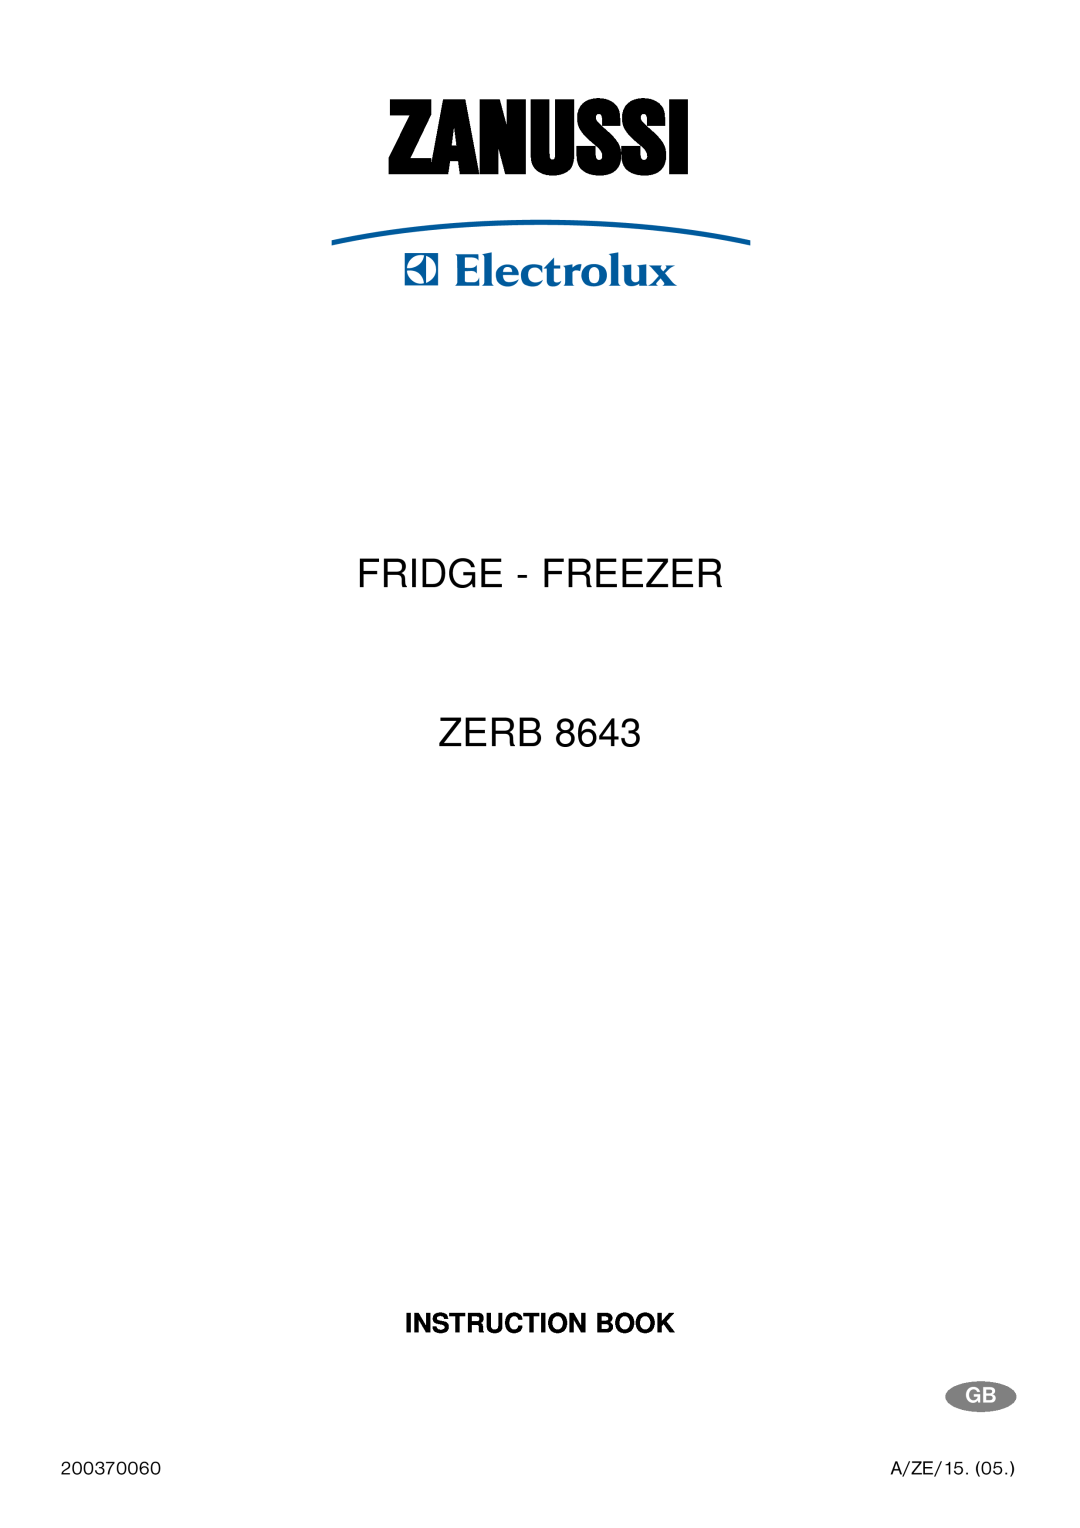 Zanussi ZERB 8643 manual Zanussi, Fridge - Freezer Zerb, Instruction Book 